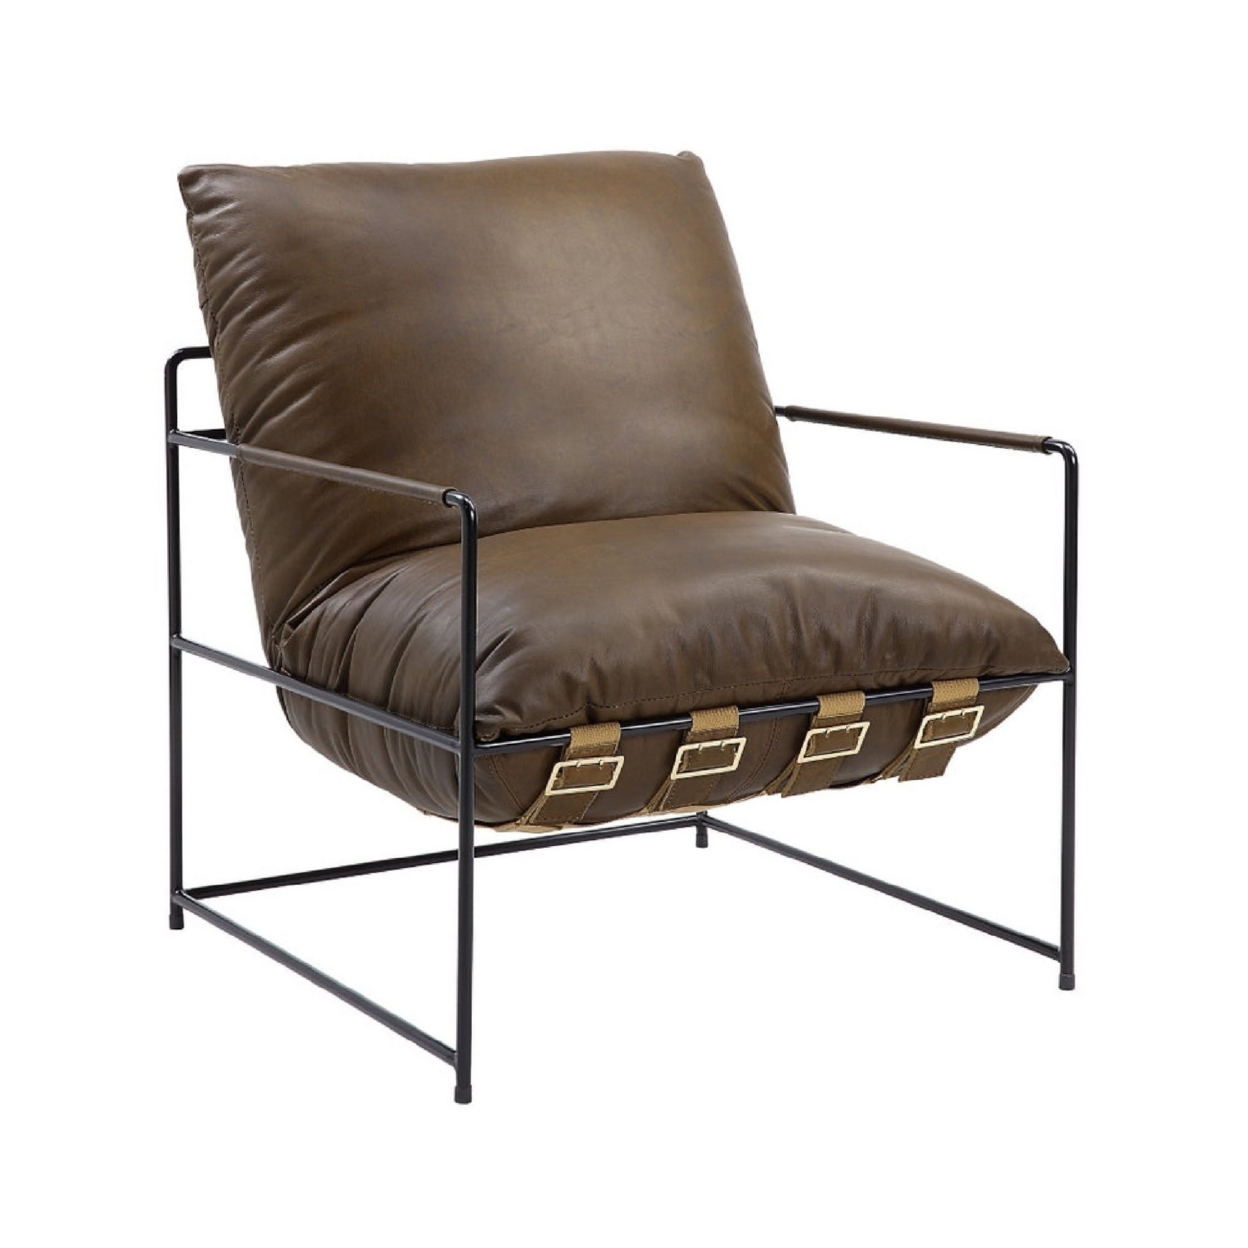 Tim 32 Inch Accent Chair, Top Grain Leather Seat, Metal Frame, Brown- Saltoro Sherpi